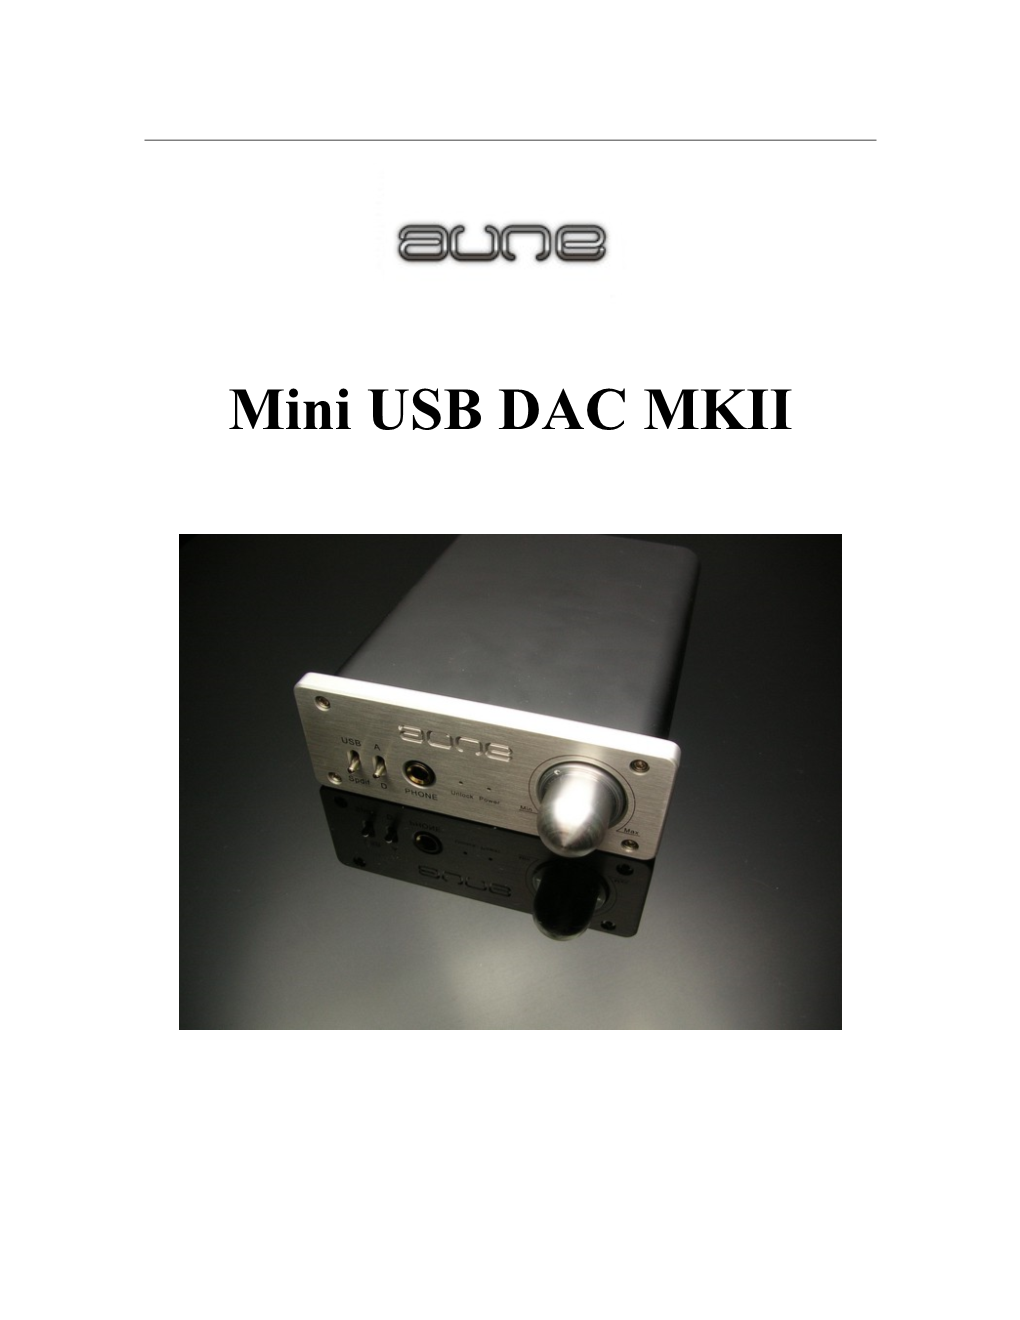 Mini USB DAC MKII